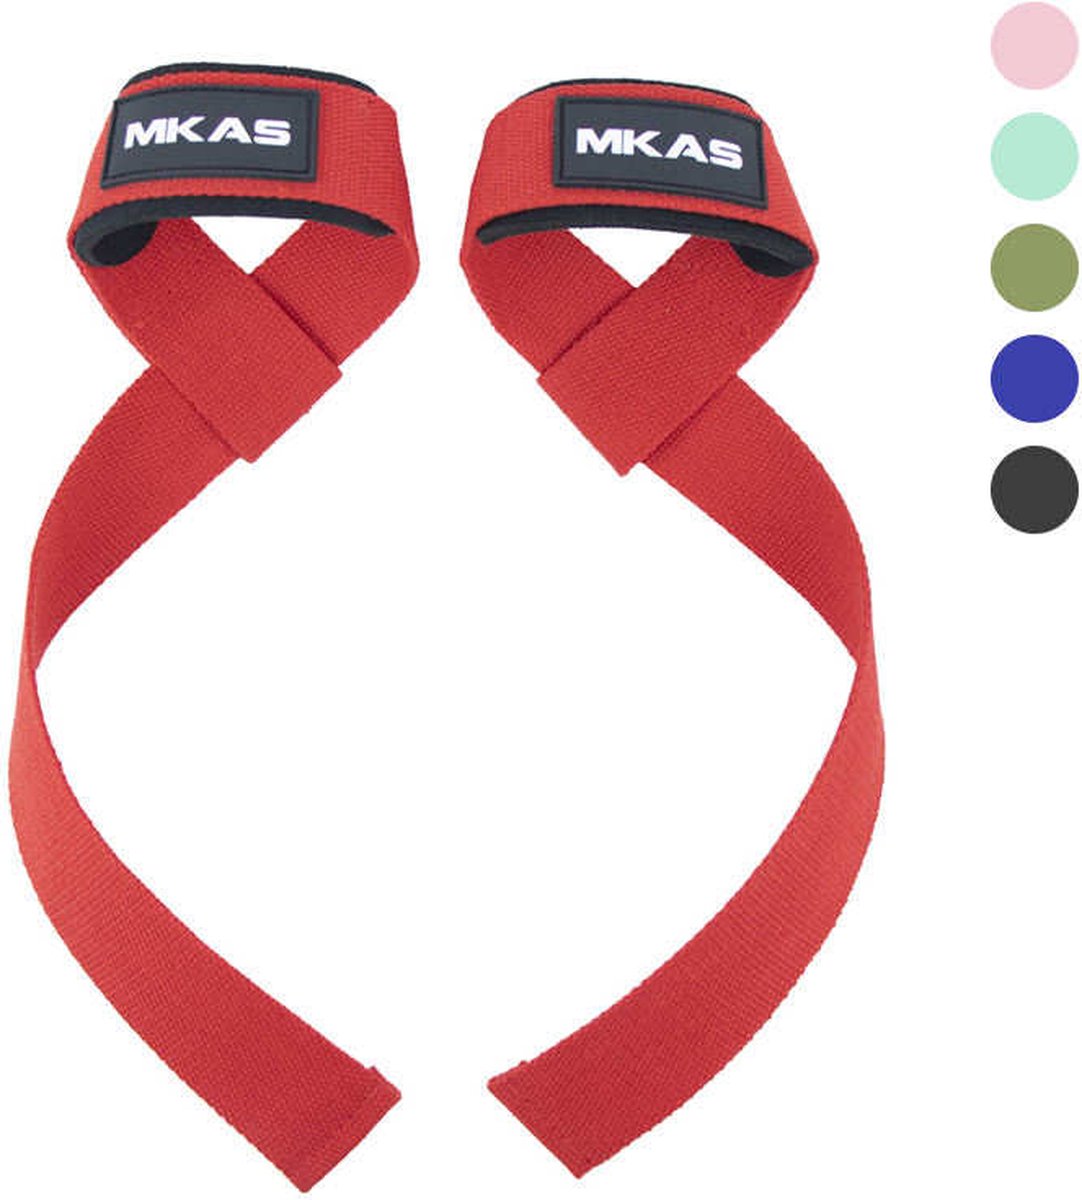 MKAS - Lifting straps Rood - 2 Stuks-Lifting grip hooks- Gym straps- Dead lift straps -Fitness-Cross-fit en krachtraining